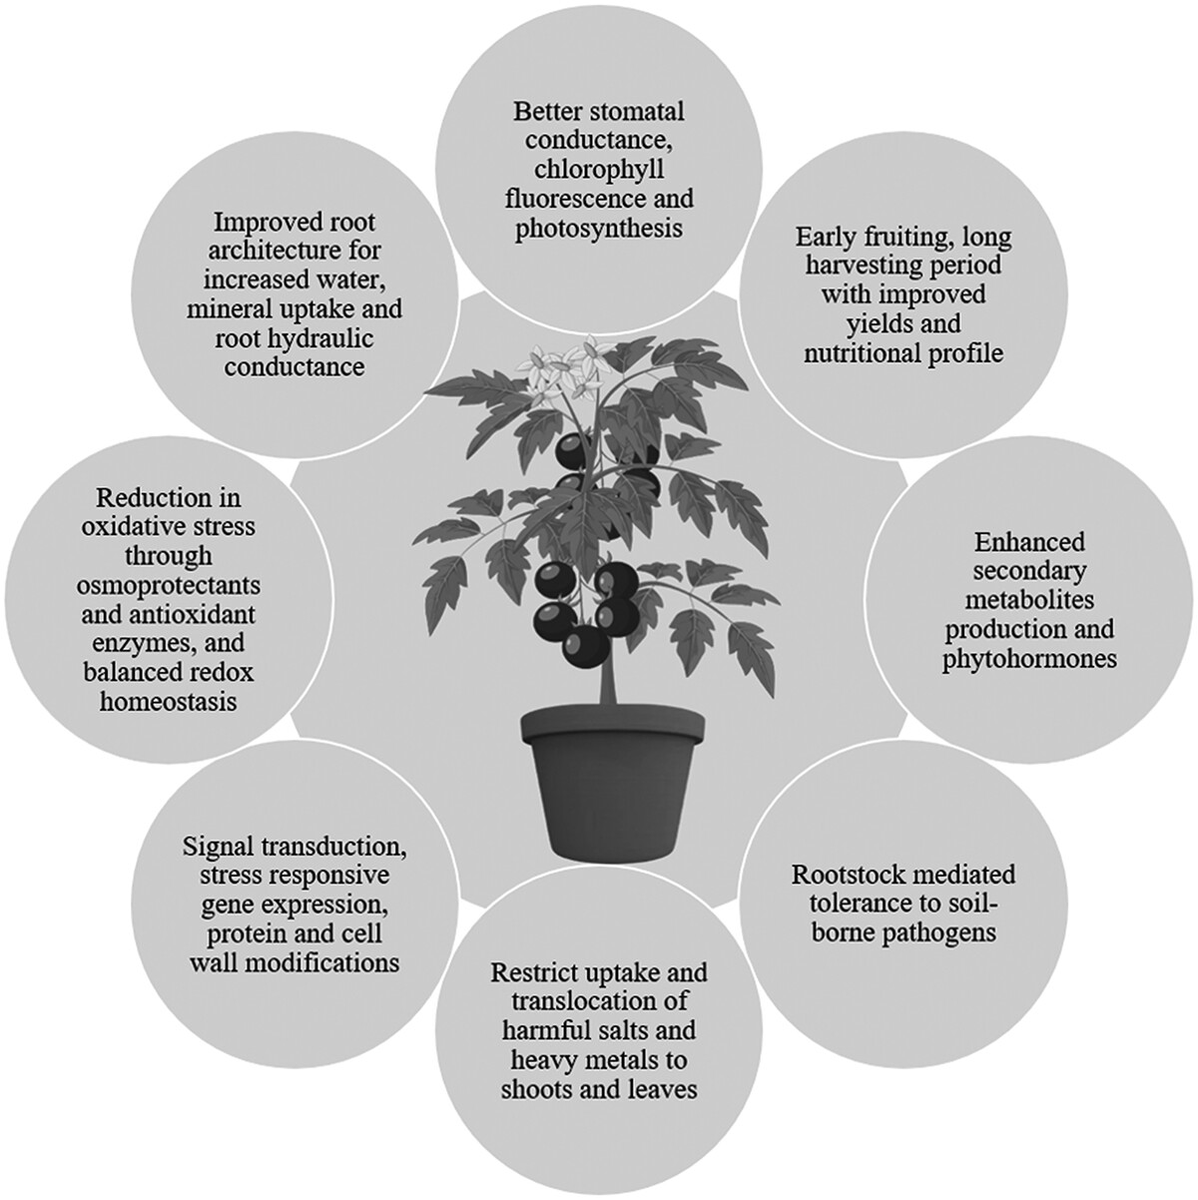 Review by Bahadur et al. @JofHSB @icarindia @tandfonline @TandF_Africa #Grafting in #vegetables to improve #abiotic stress tolerance, #yield and #quality tandfonline.com/doi/full/10.10… #PlantSci @NGC_Acti_Tech @WorldVegCenter @FlaFruitandVeg @favoriteveg @kevinfolta @Hortres